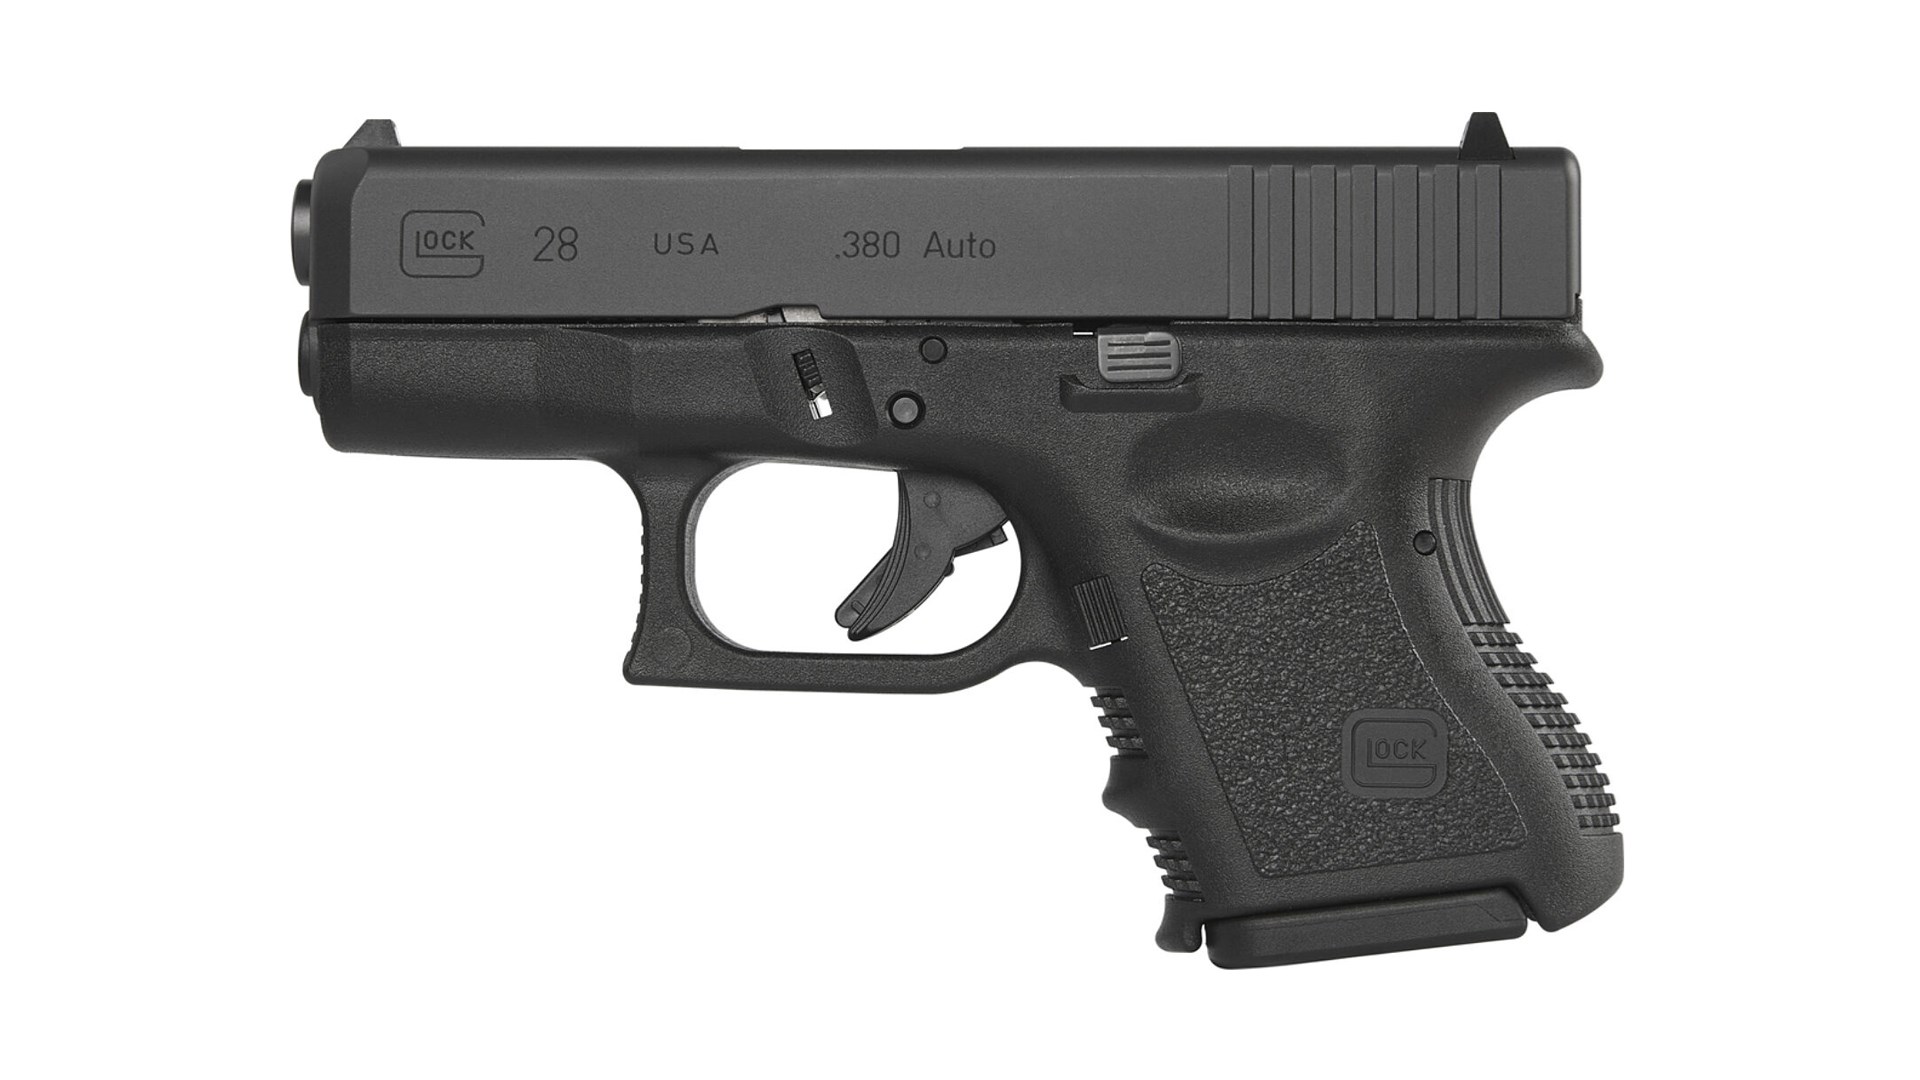 Left side of the all-black Glock 28 shown on white.